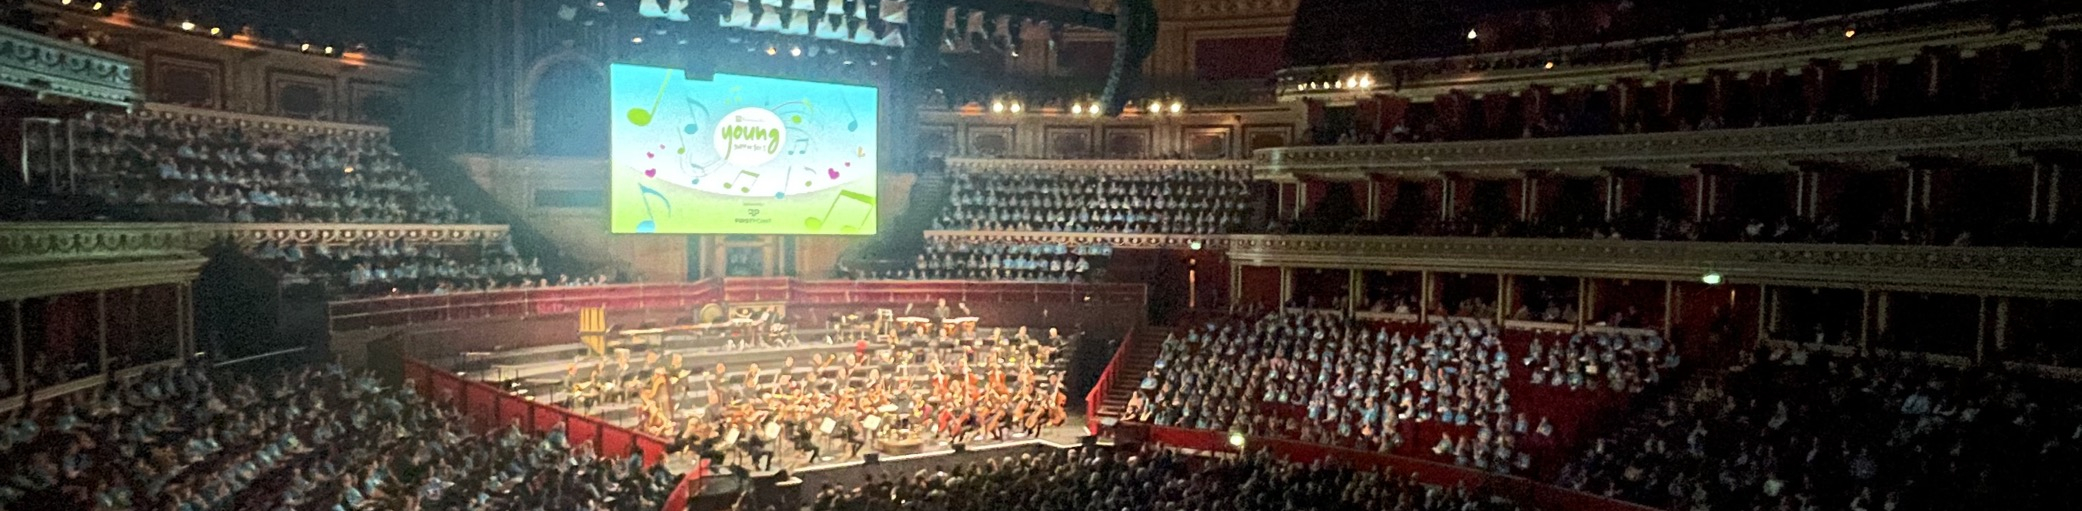 Royal Albert Hall during performance